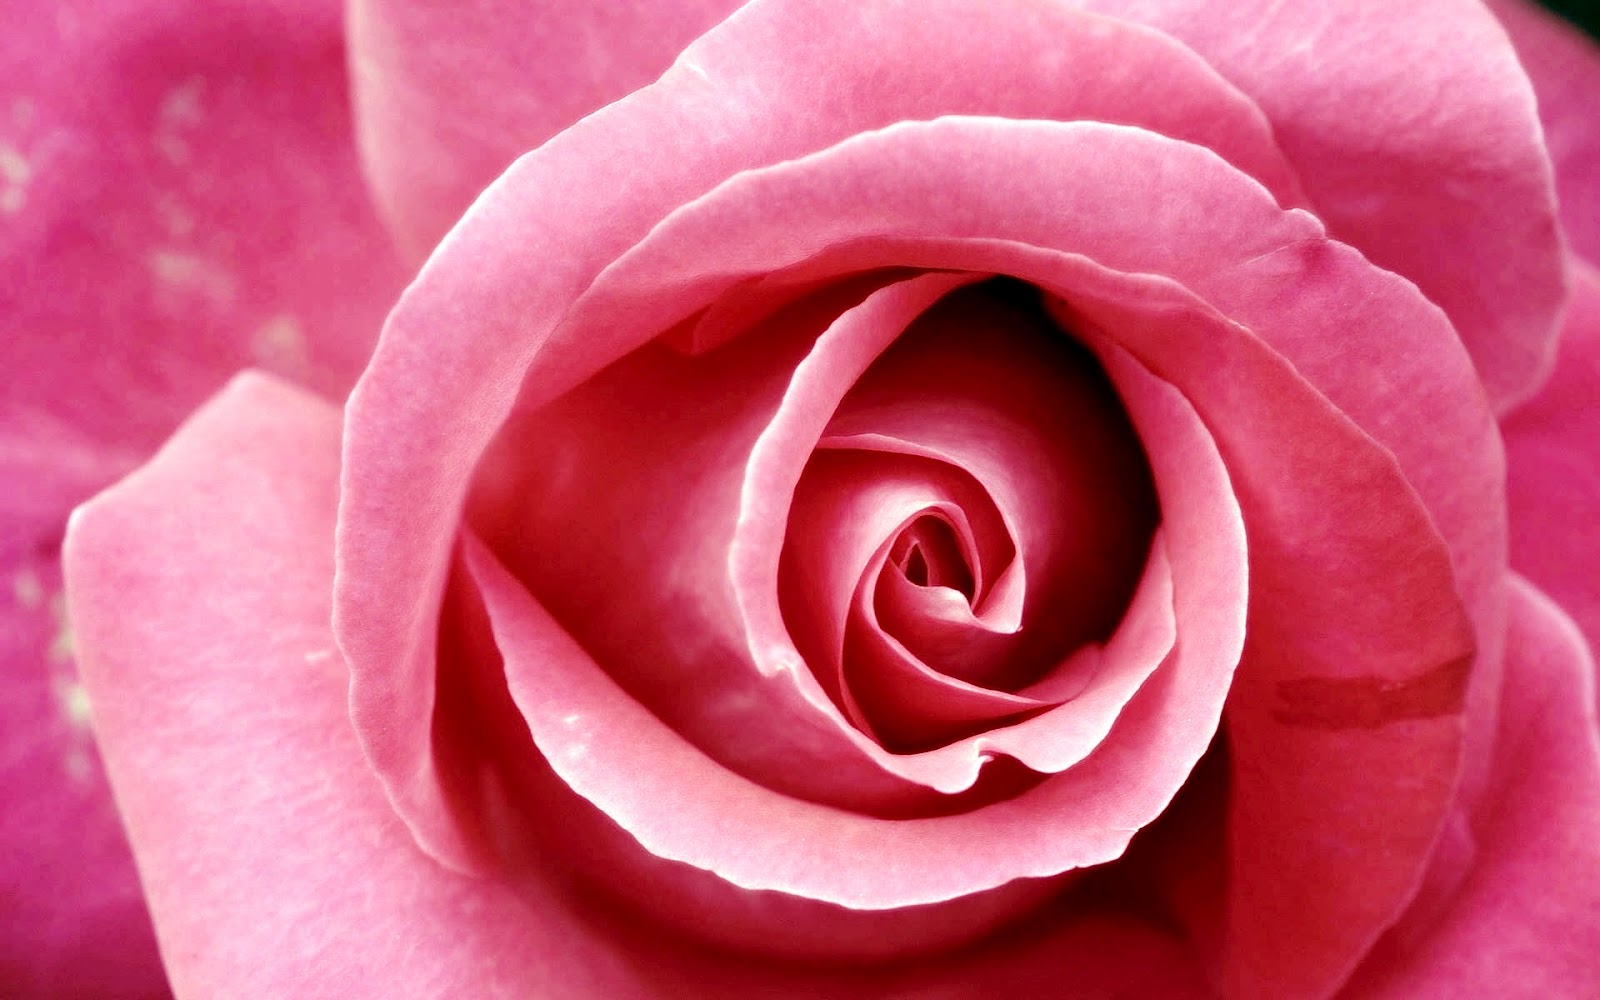 http://4.bp.blogspot.com/-qoJ84B3C-Hg/T0a-k9WAiaI/AAAAAAAADwo/zZ1ydGFowcA/s1600/beautiful_pink_rose-wide.jpg